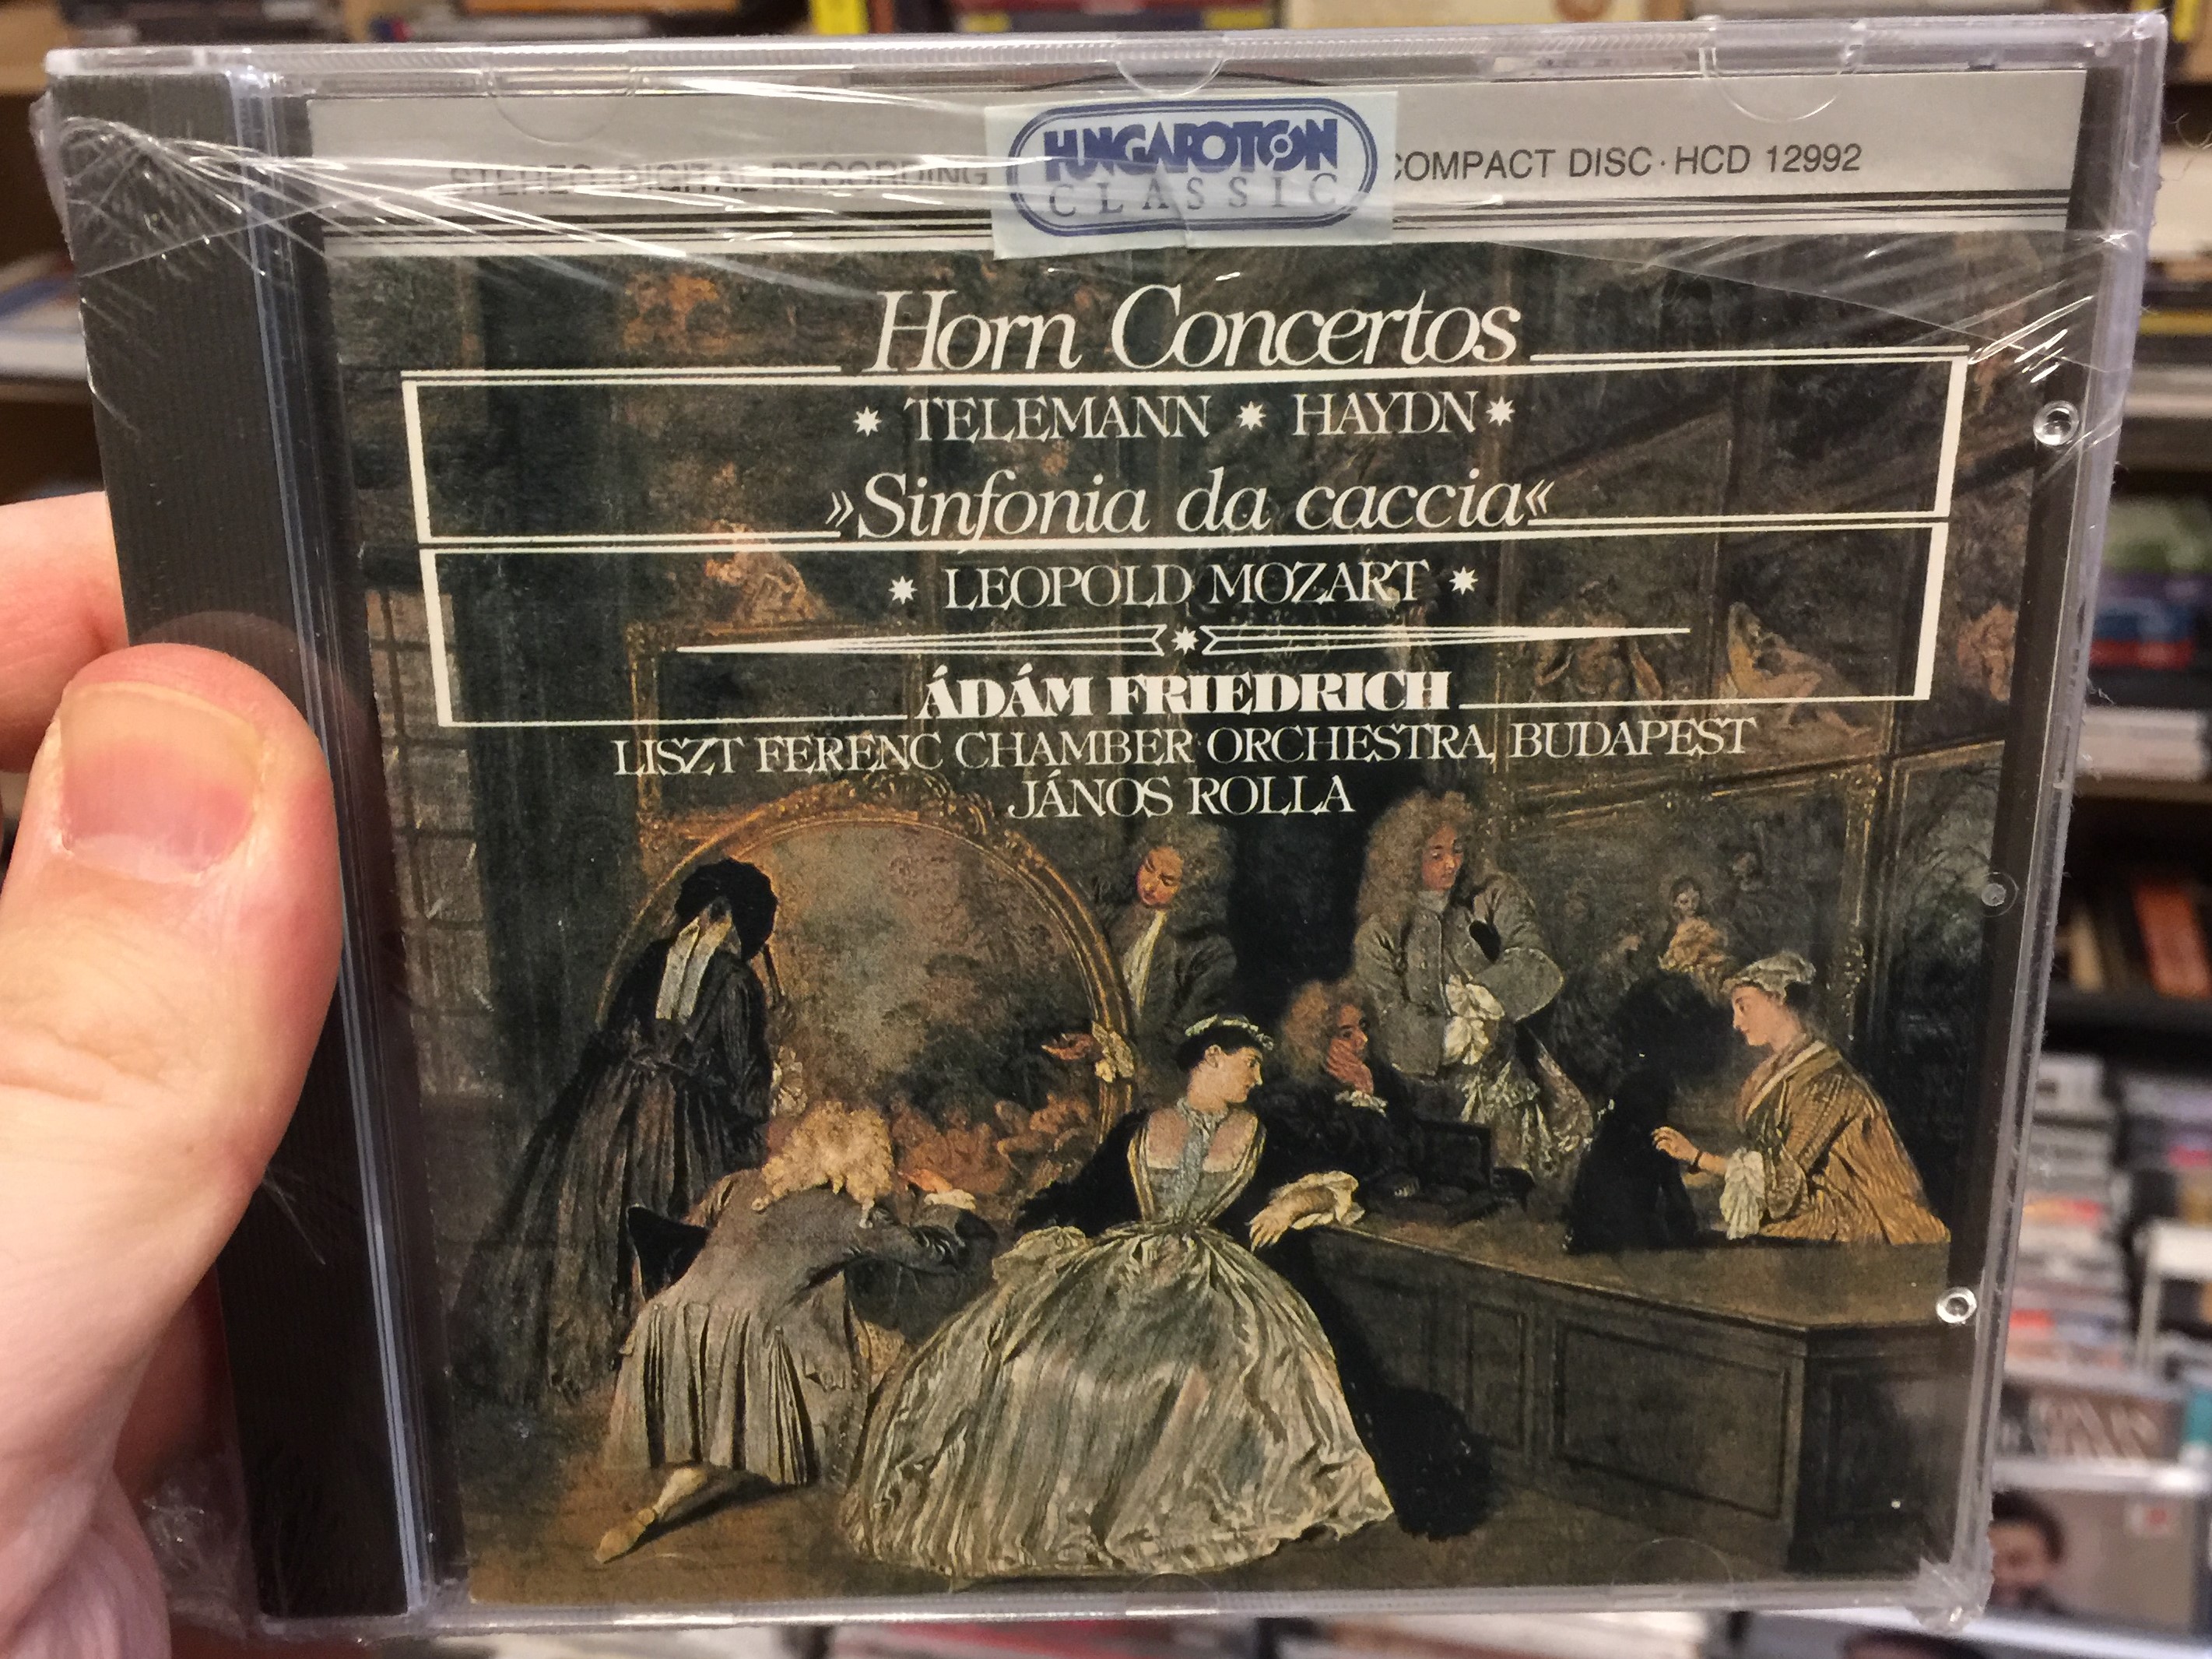 horn-concertos-telemann-haydn-sinfonia-da-caccia-leopold-mozart-d-m-friedrich-liszt-ferenc-chamber-orchestra-budapest-j-nos-rolla-hungaroton-classic-audio-cd-1989-stereo-hcd-129-1-.jpg